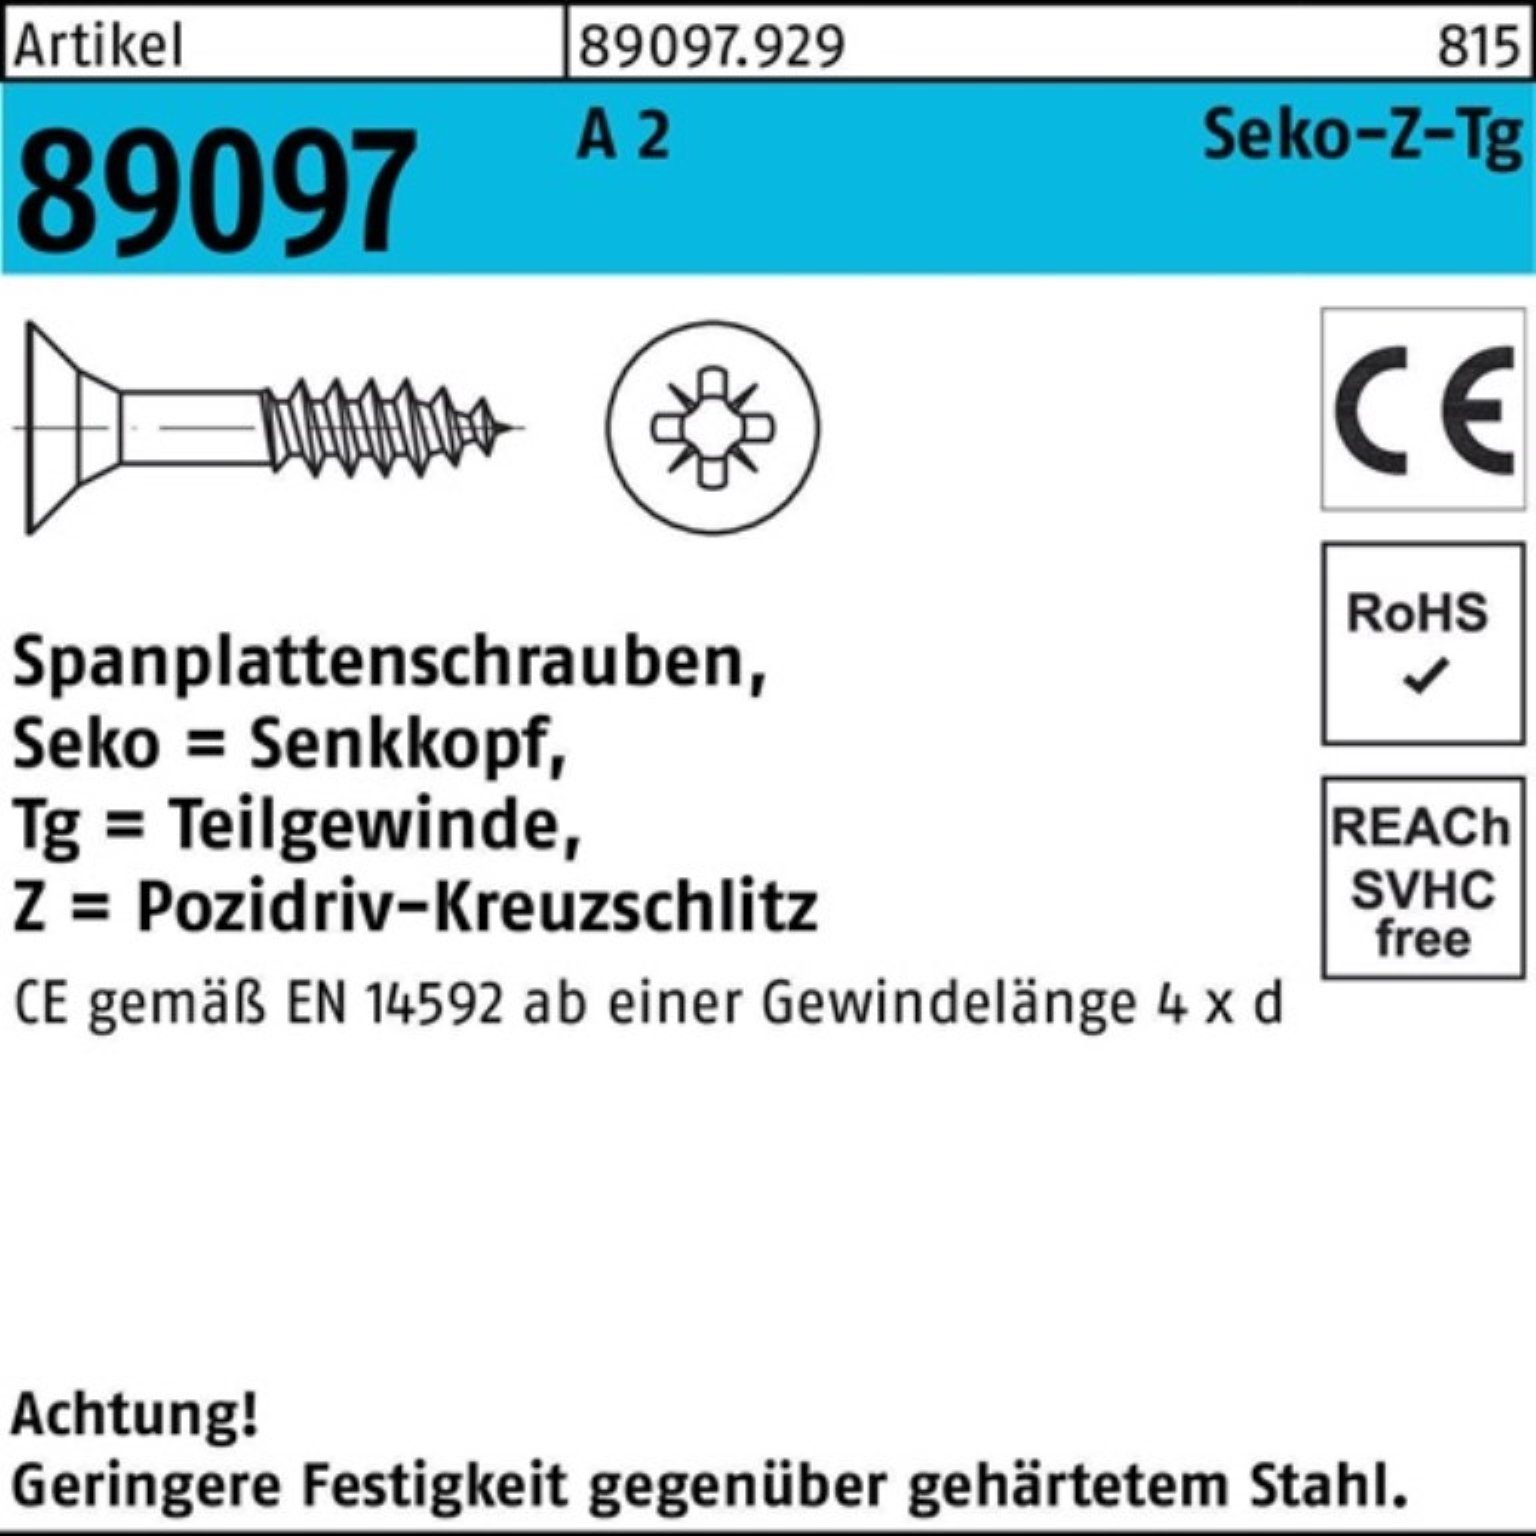 Reyher Spanplattenschraube 1000er Pack Spanplattenschraube TG 45-Z 1000 4x PZ SEKO R 89097 2 A St